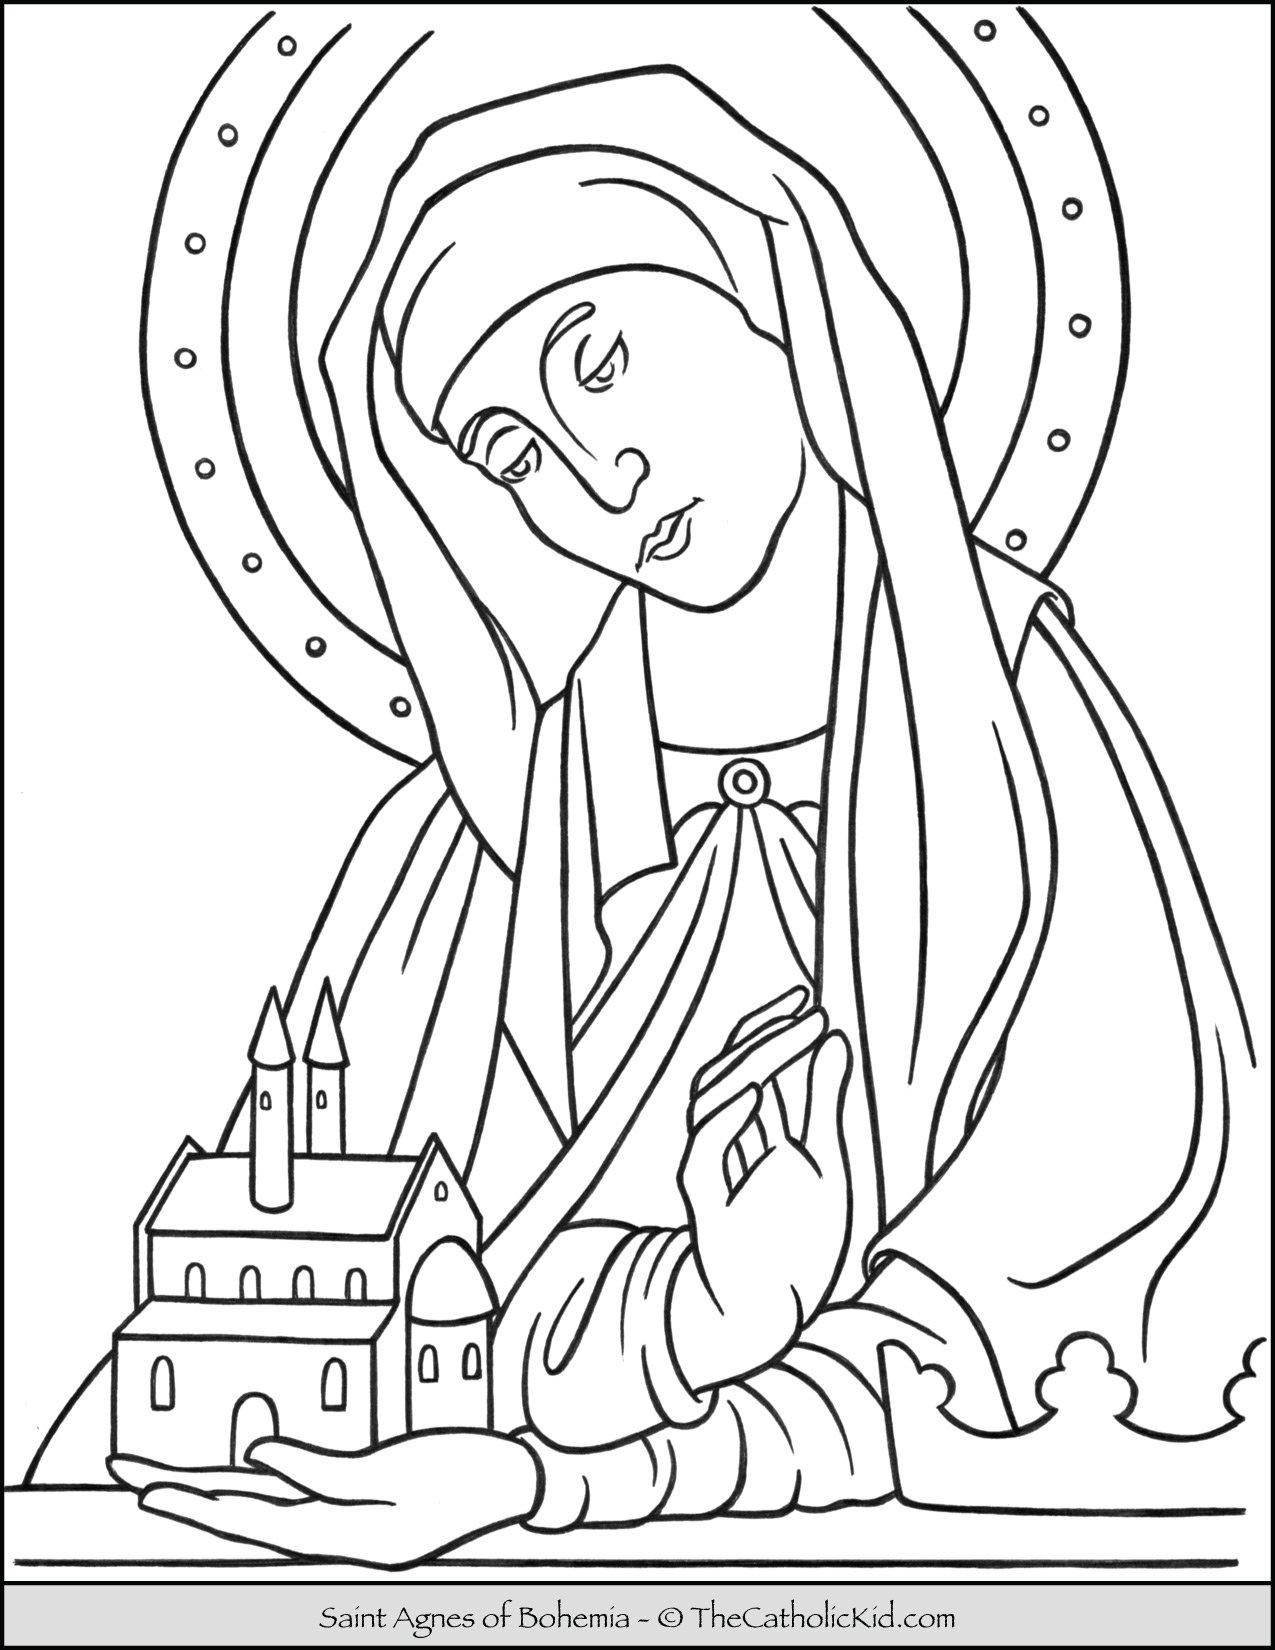 Saint agnes of bohemia coloring page